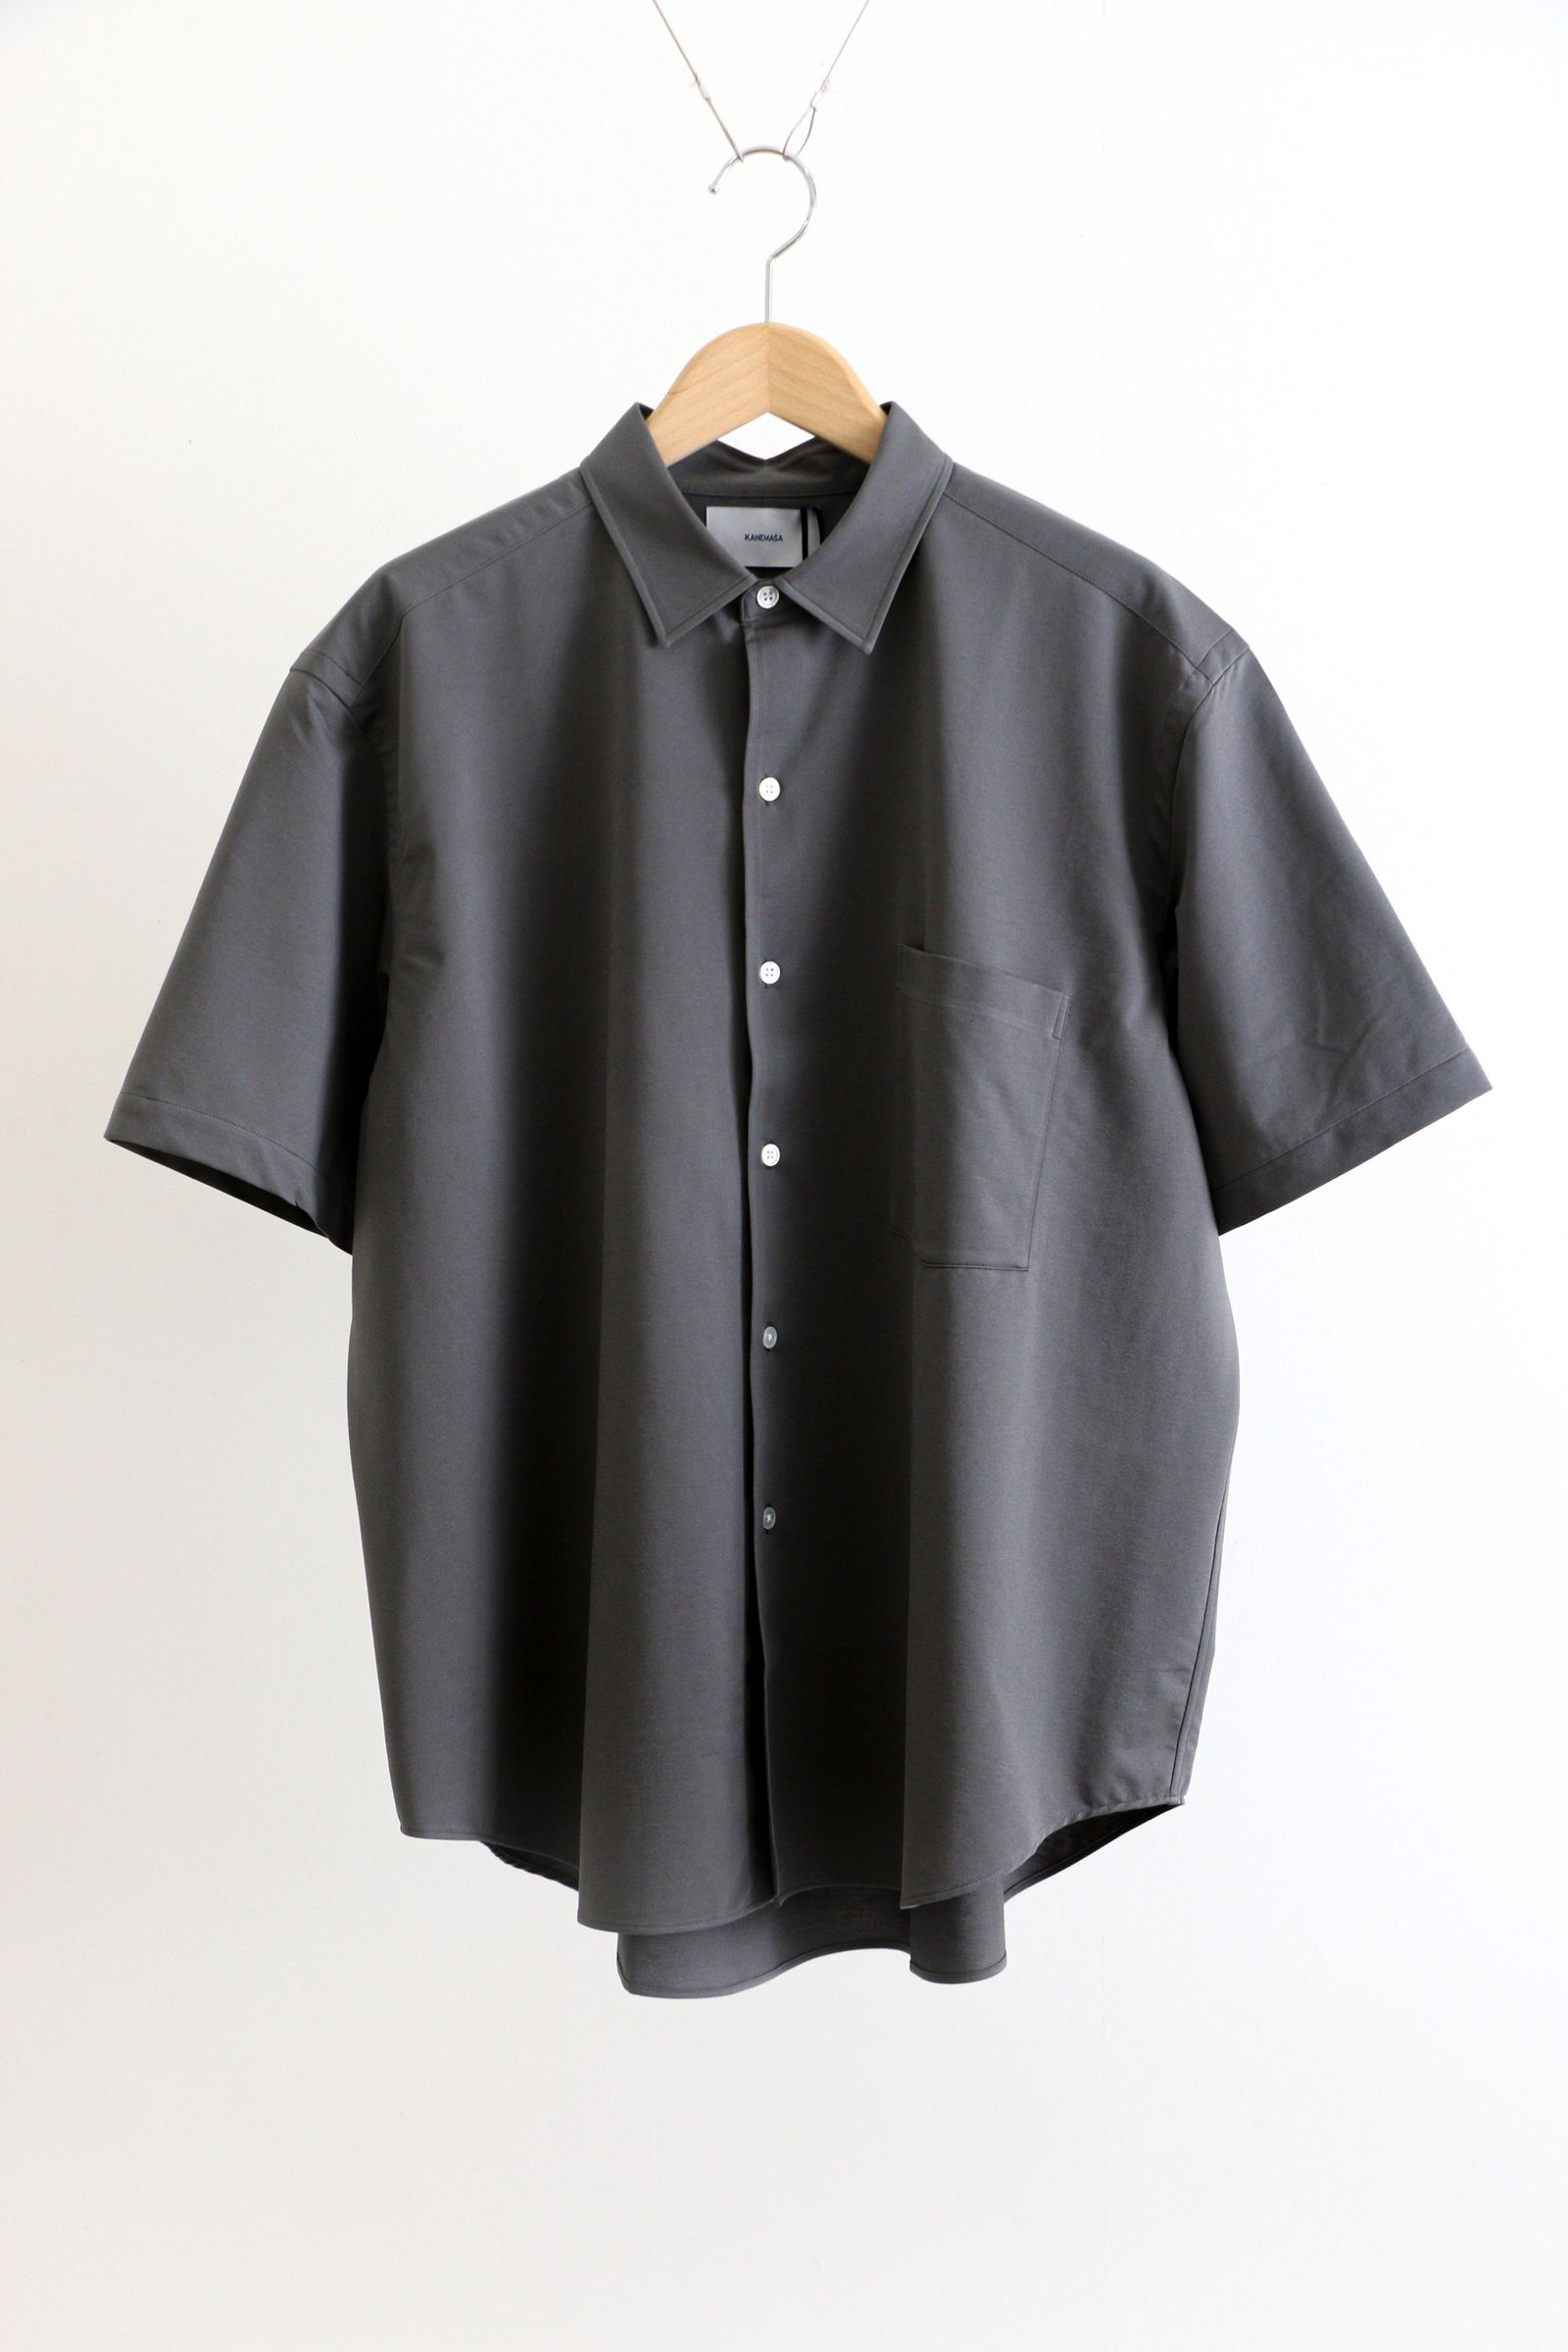 Royal Ox Dress Jersey Short Sleeve Shirt GRAY / ショートスリーブシャツ / 半袖シャツ / - 2